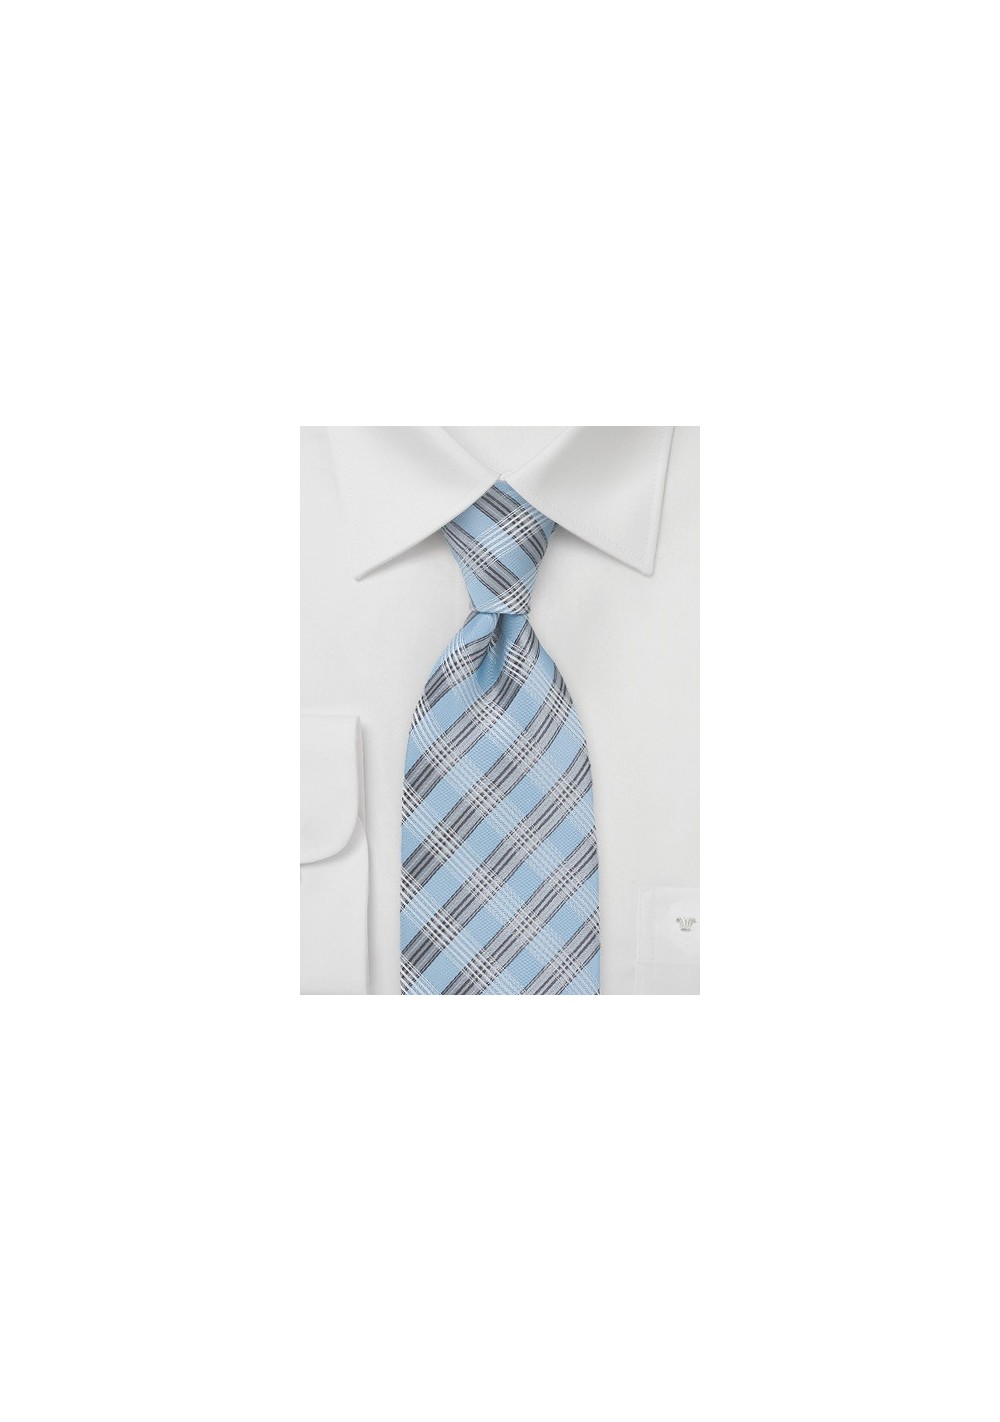 Powder Blue Patterned Tie